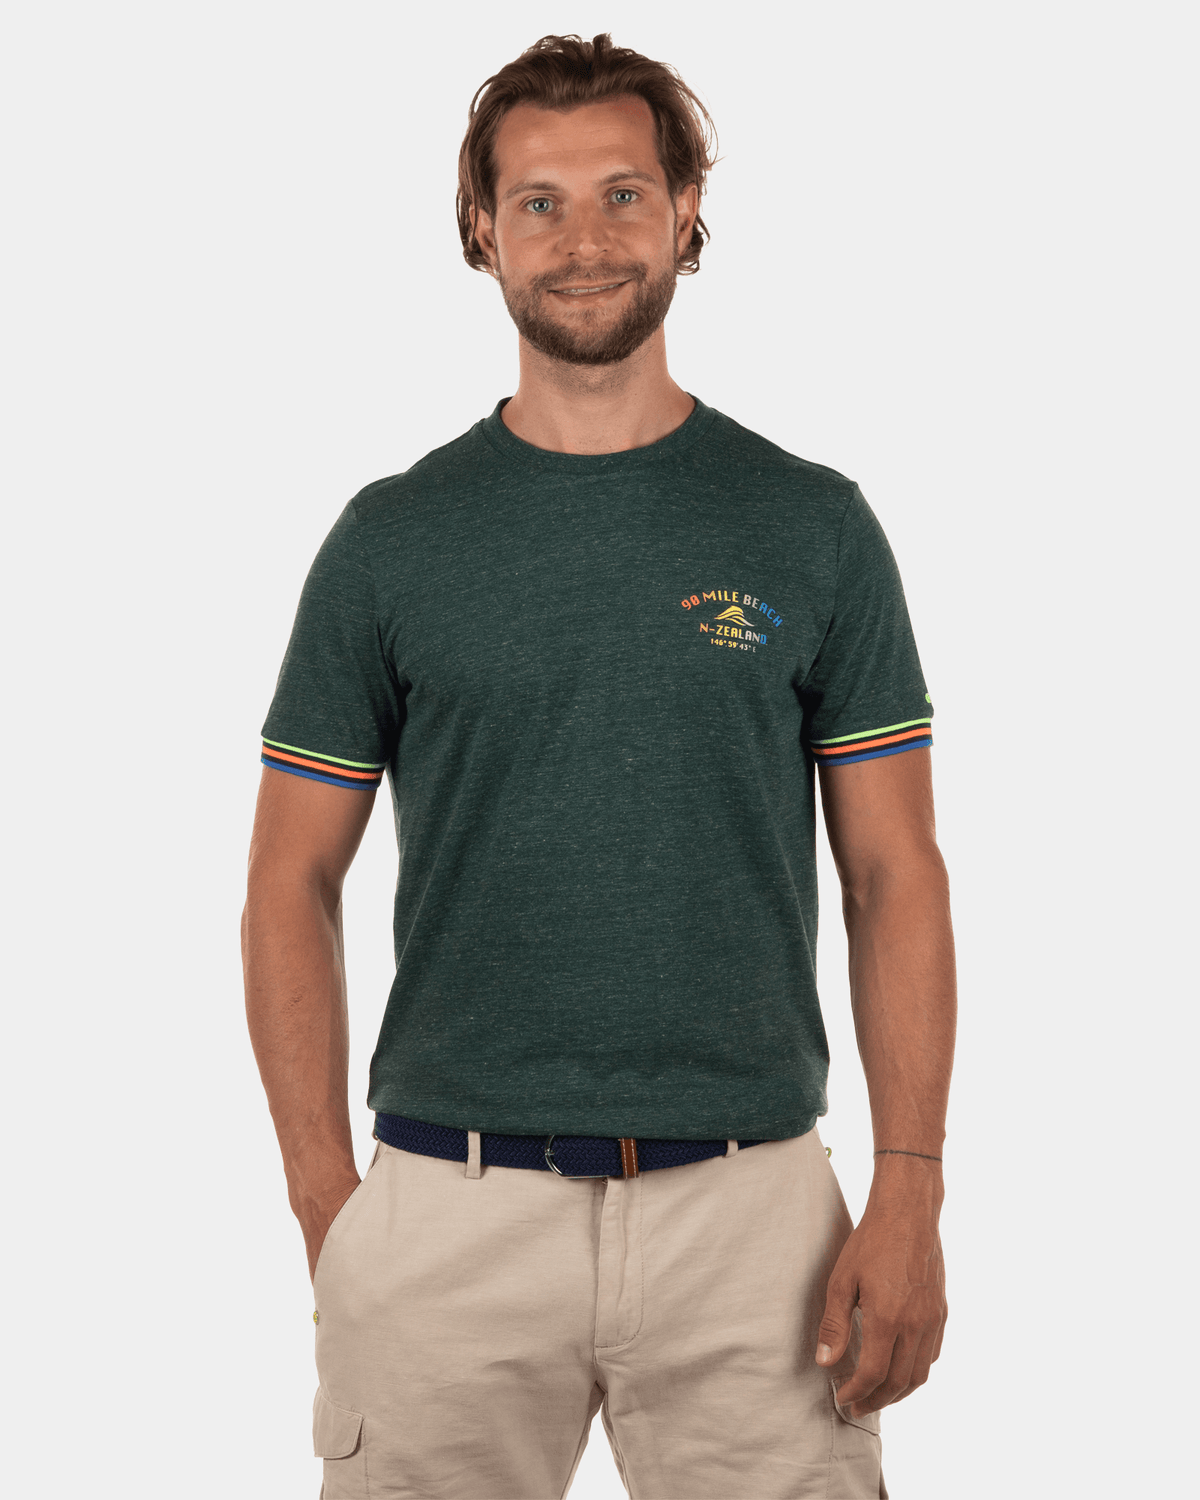 Kohangapiripiri sportliches T-Shirt - Lead Green